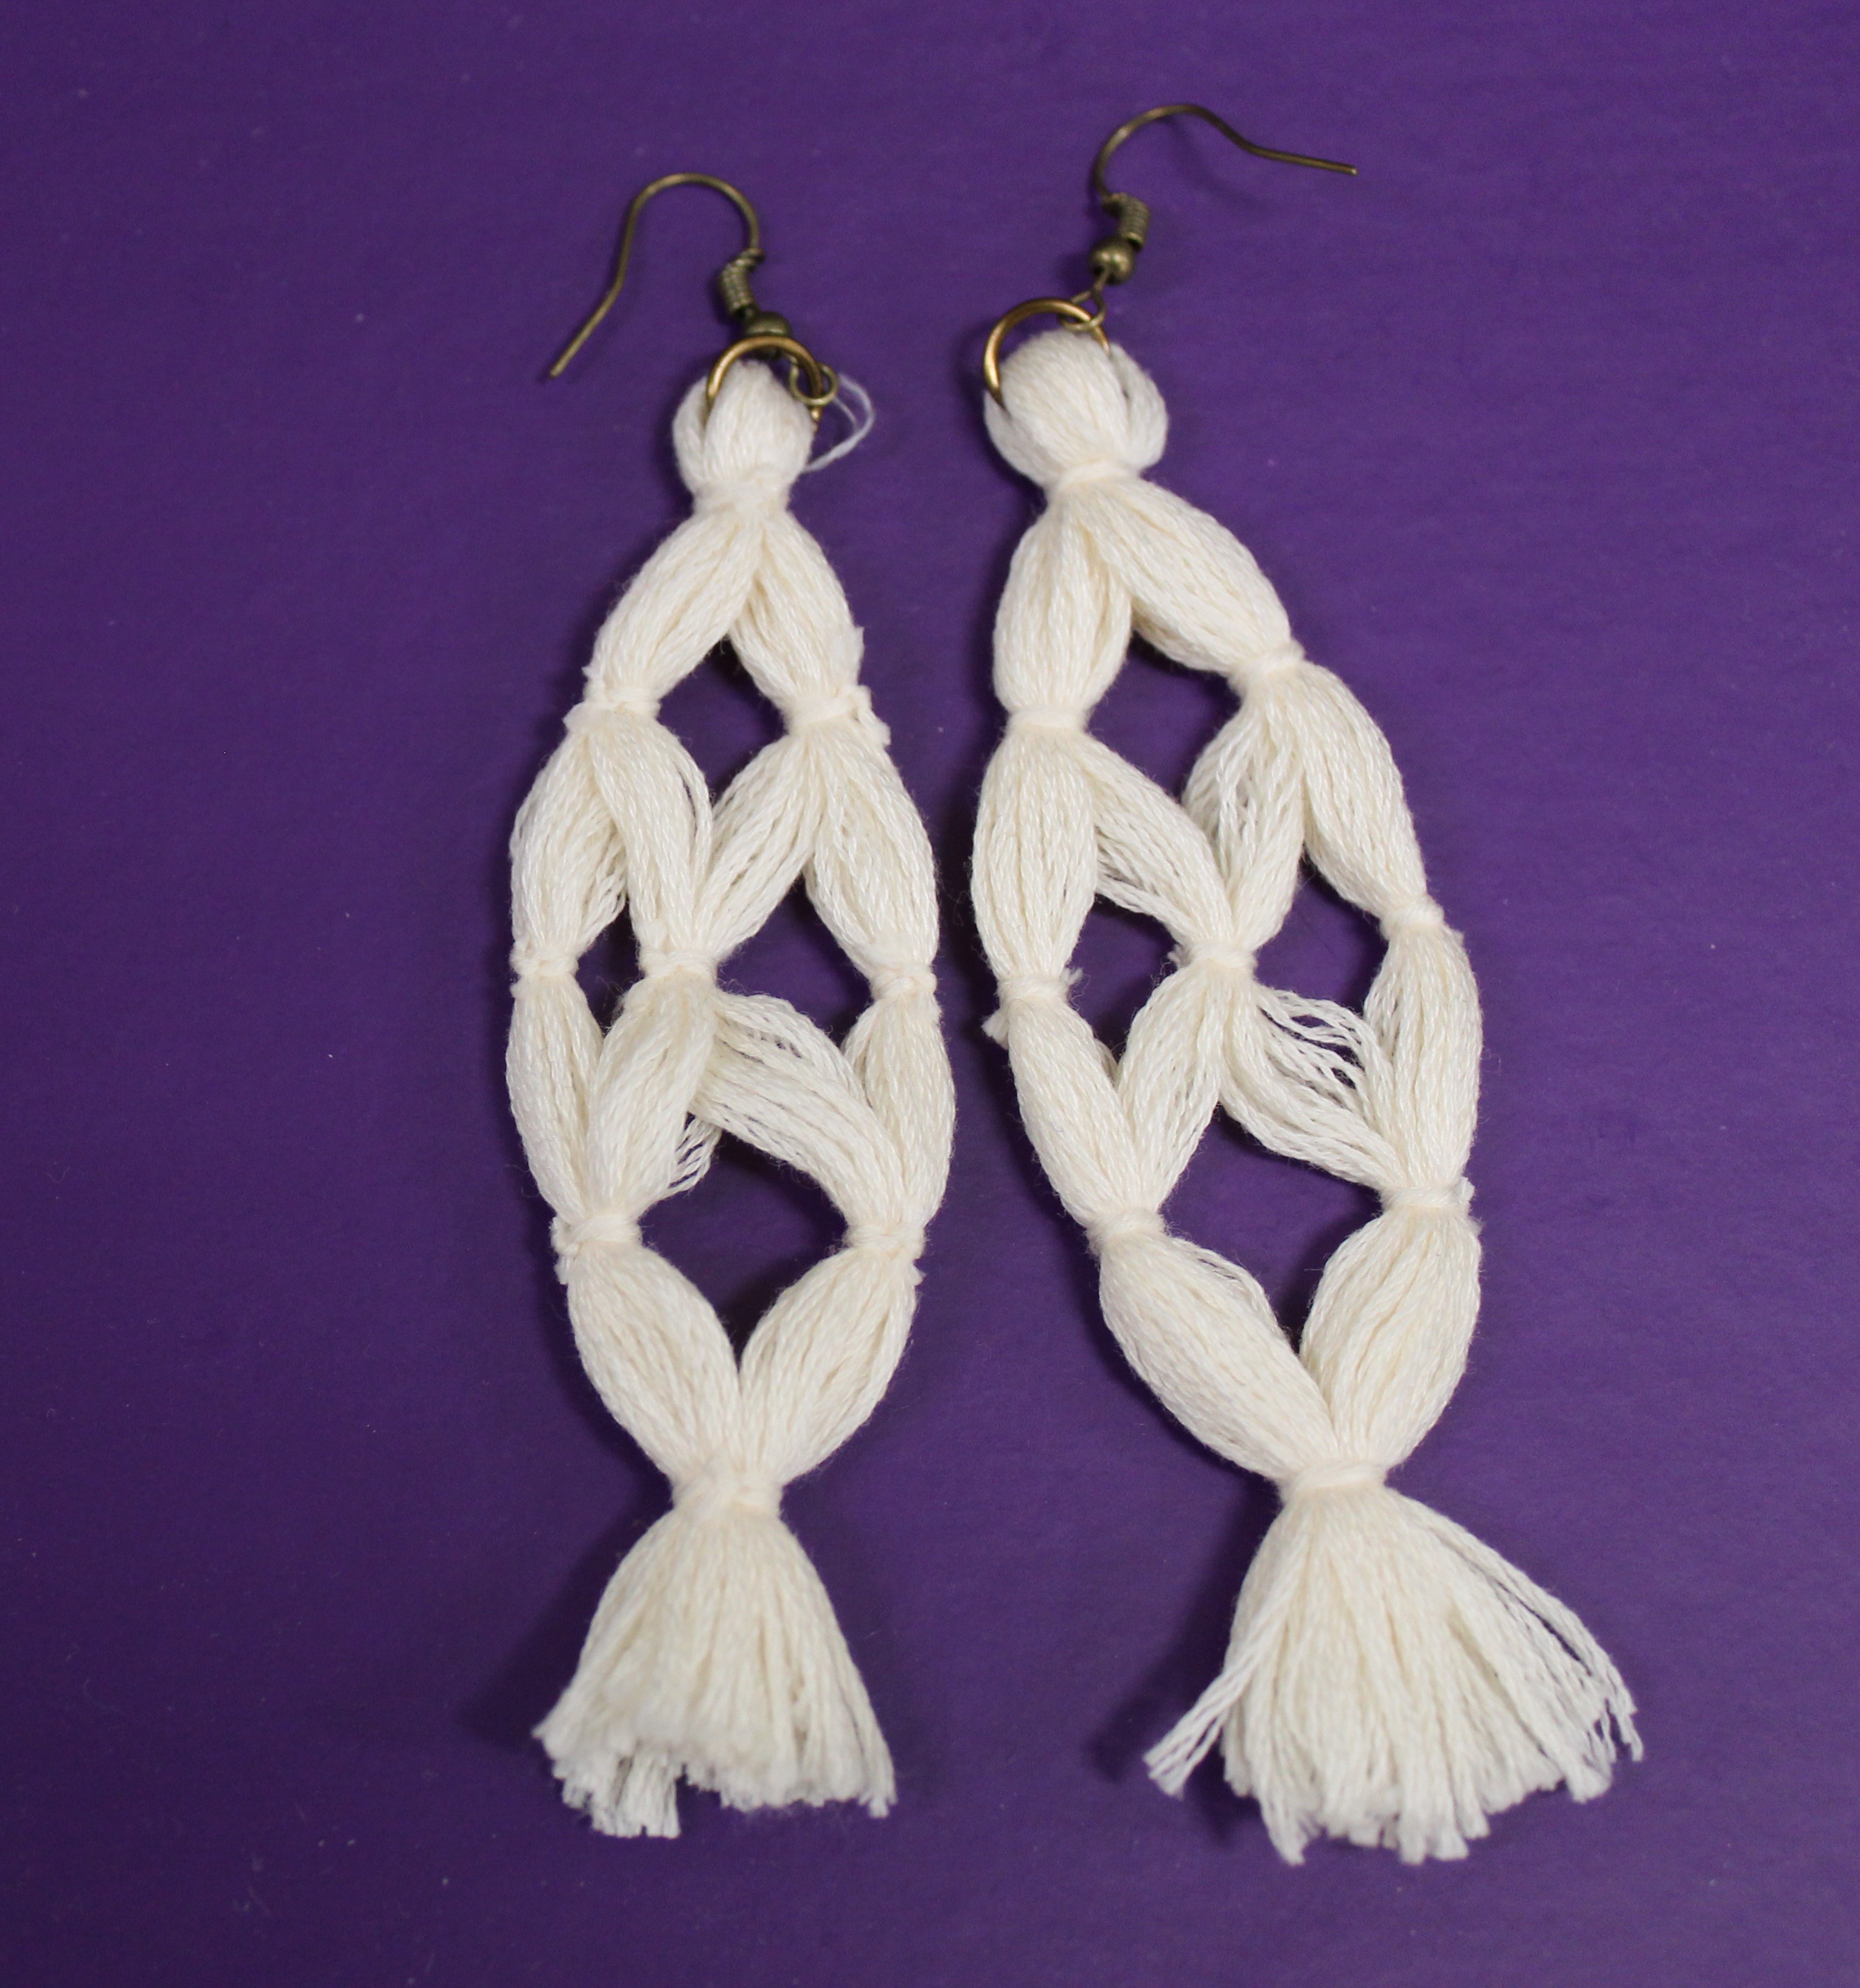 Image of a pair of white tassel earrings